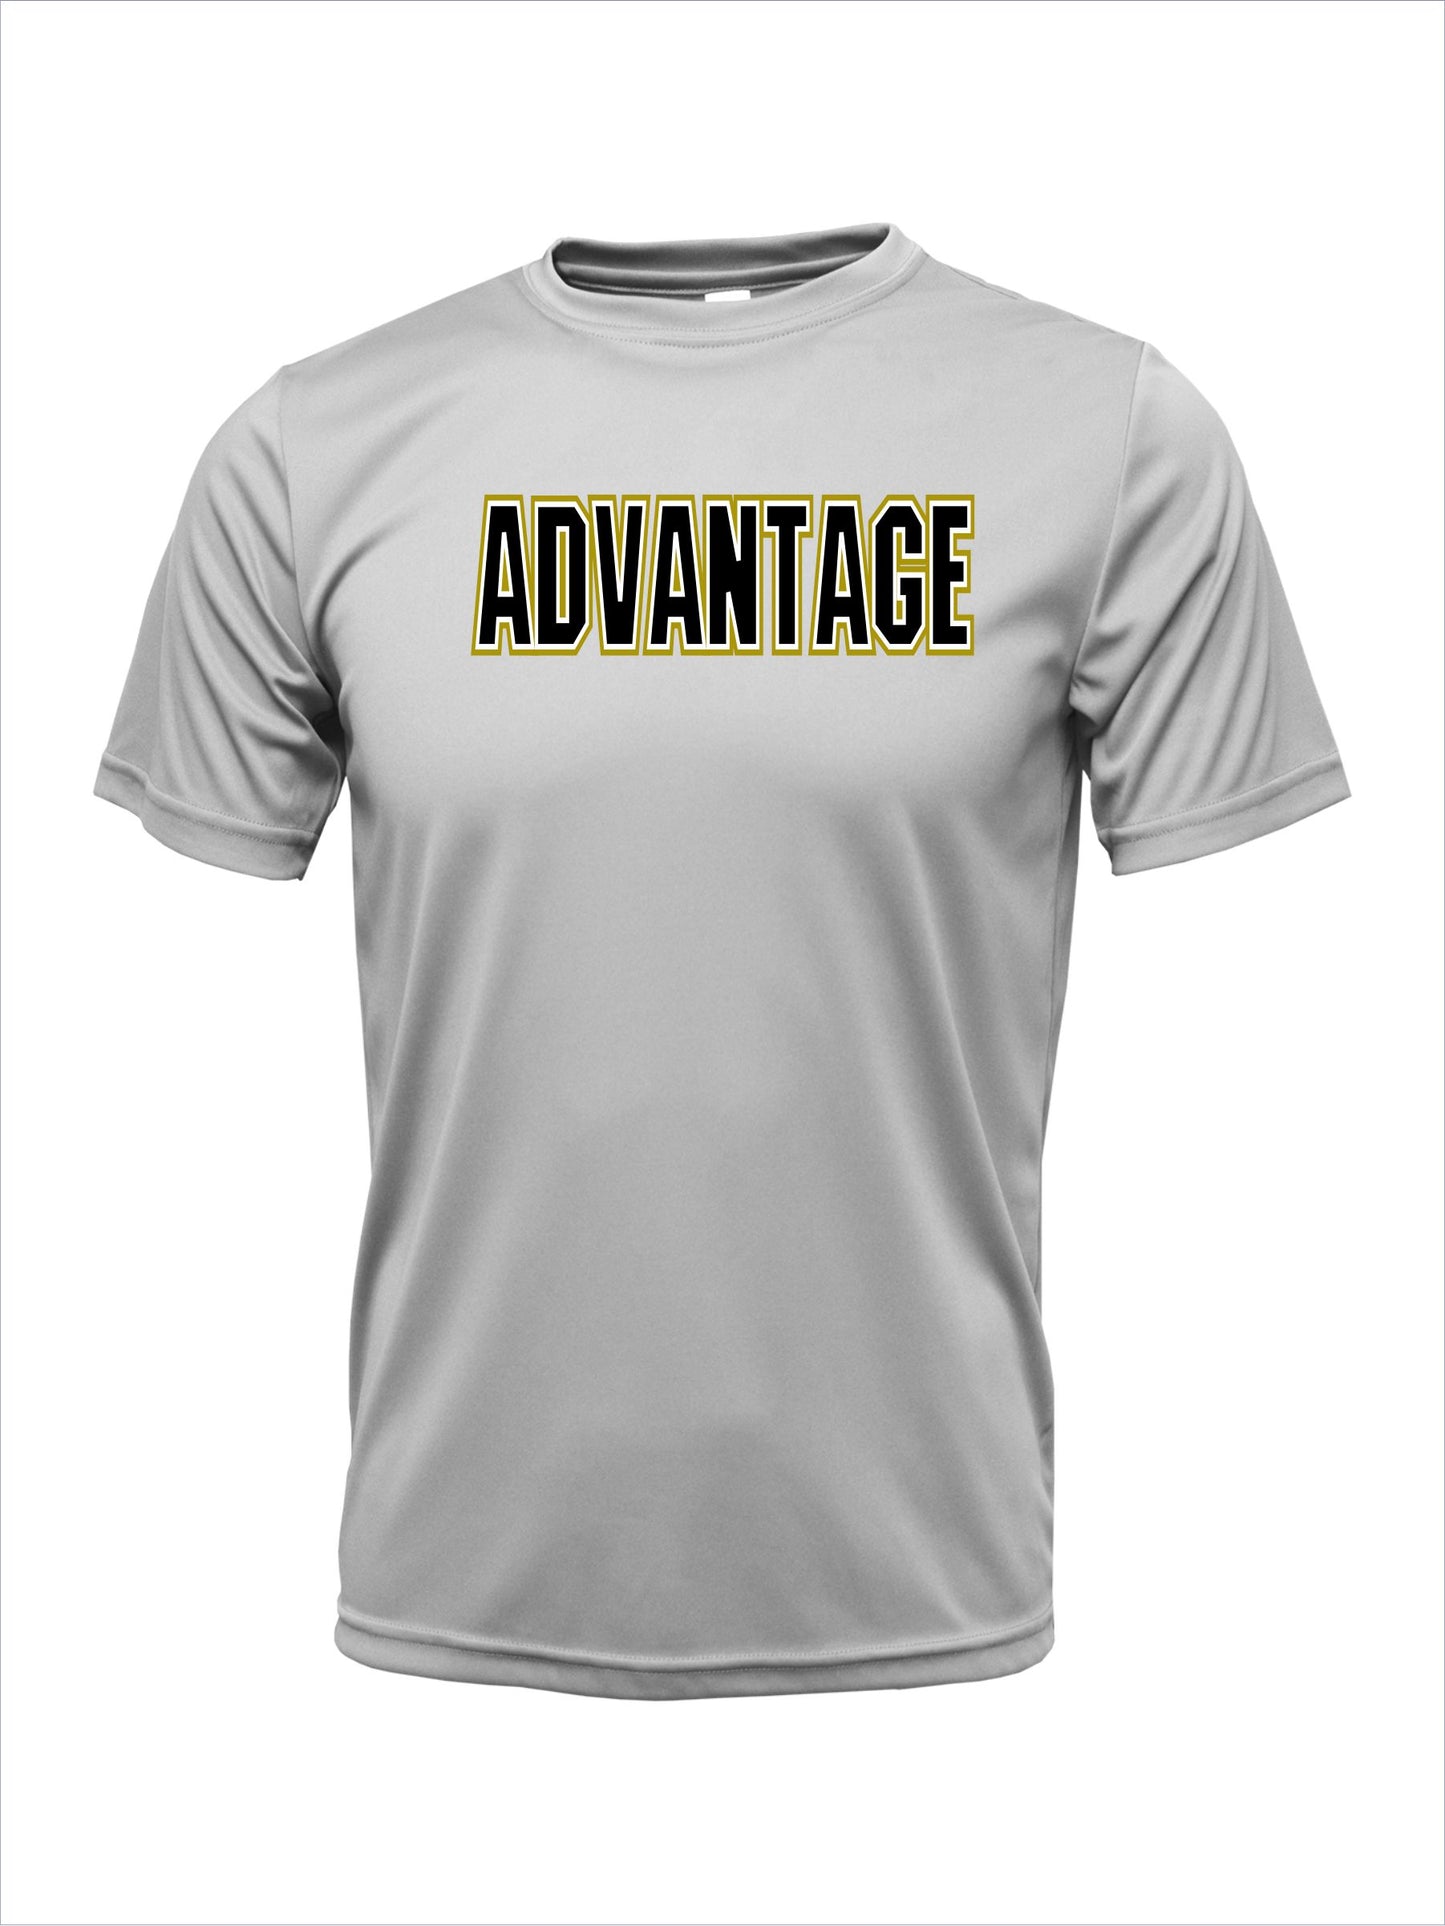 Short Sleeve "Advantage" Dri-Fit T-Shirt